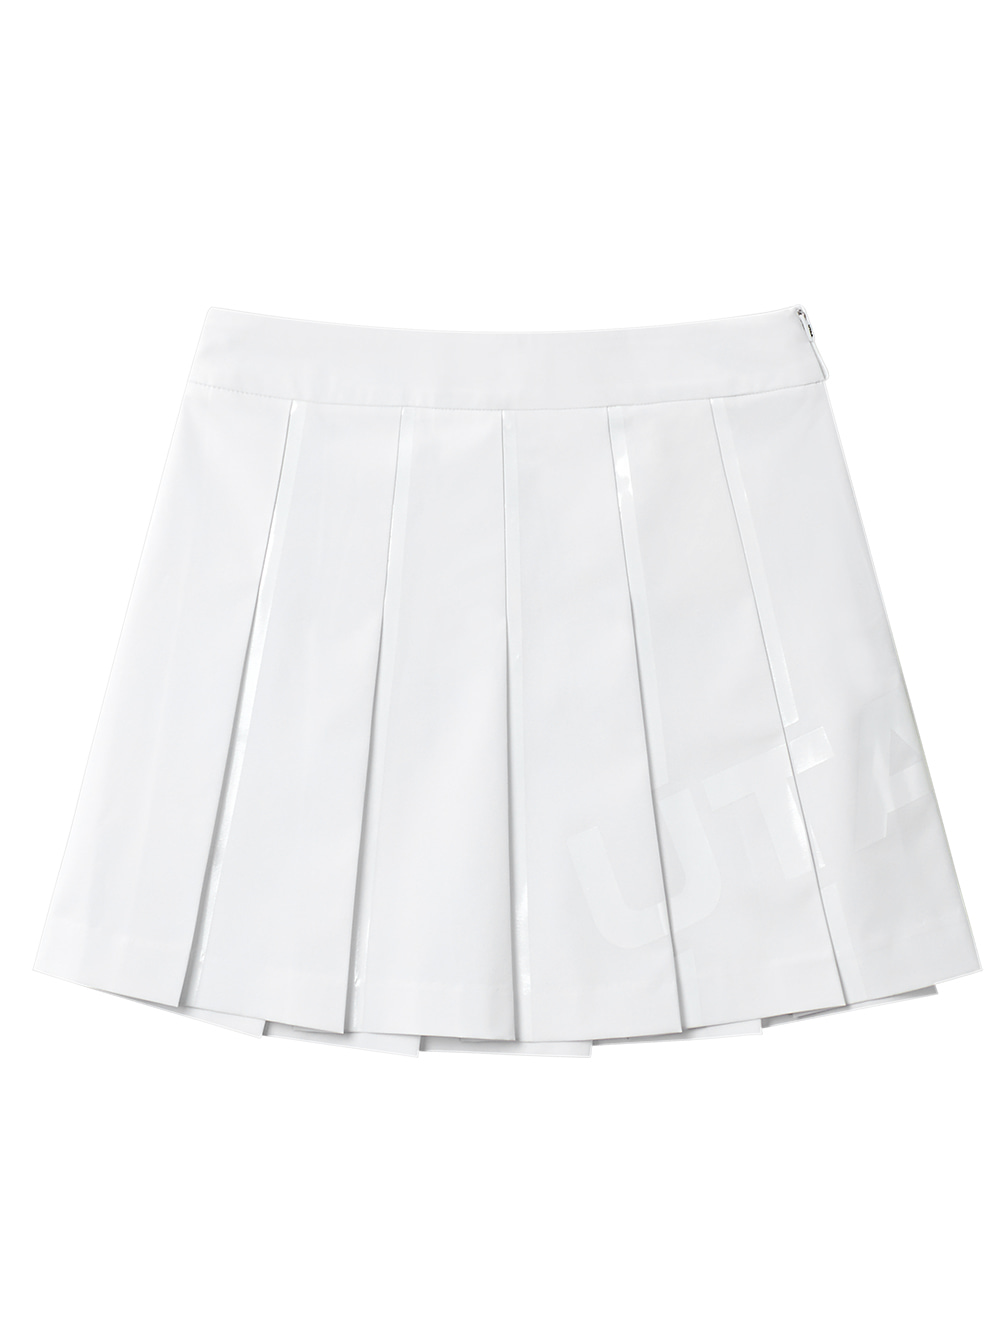 UTAA Welding Bounce Logo Flare Fan Skirt : White (UC1SKF120WH)